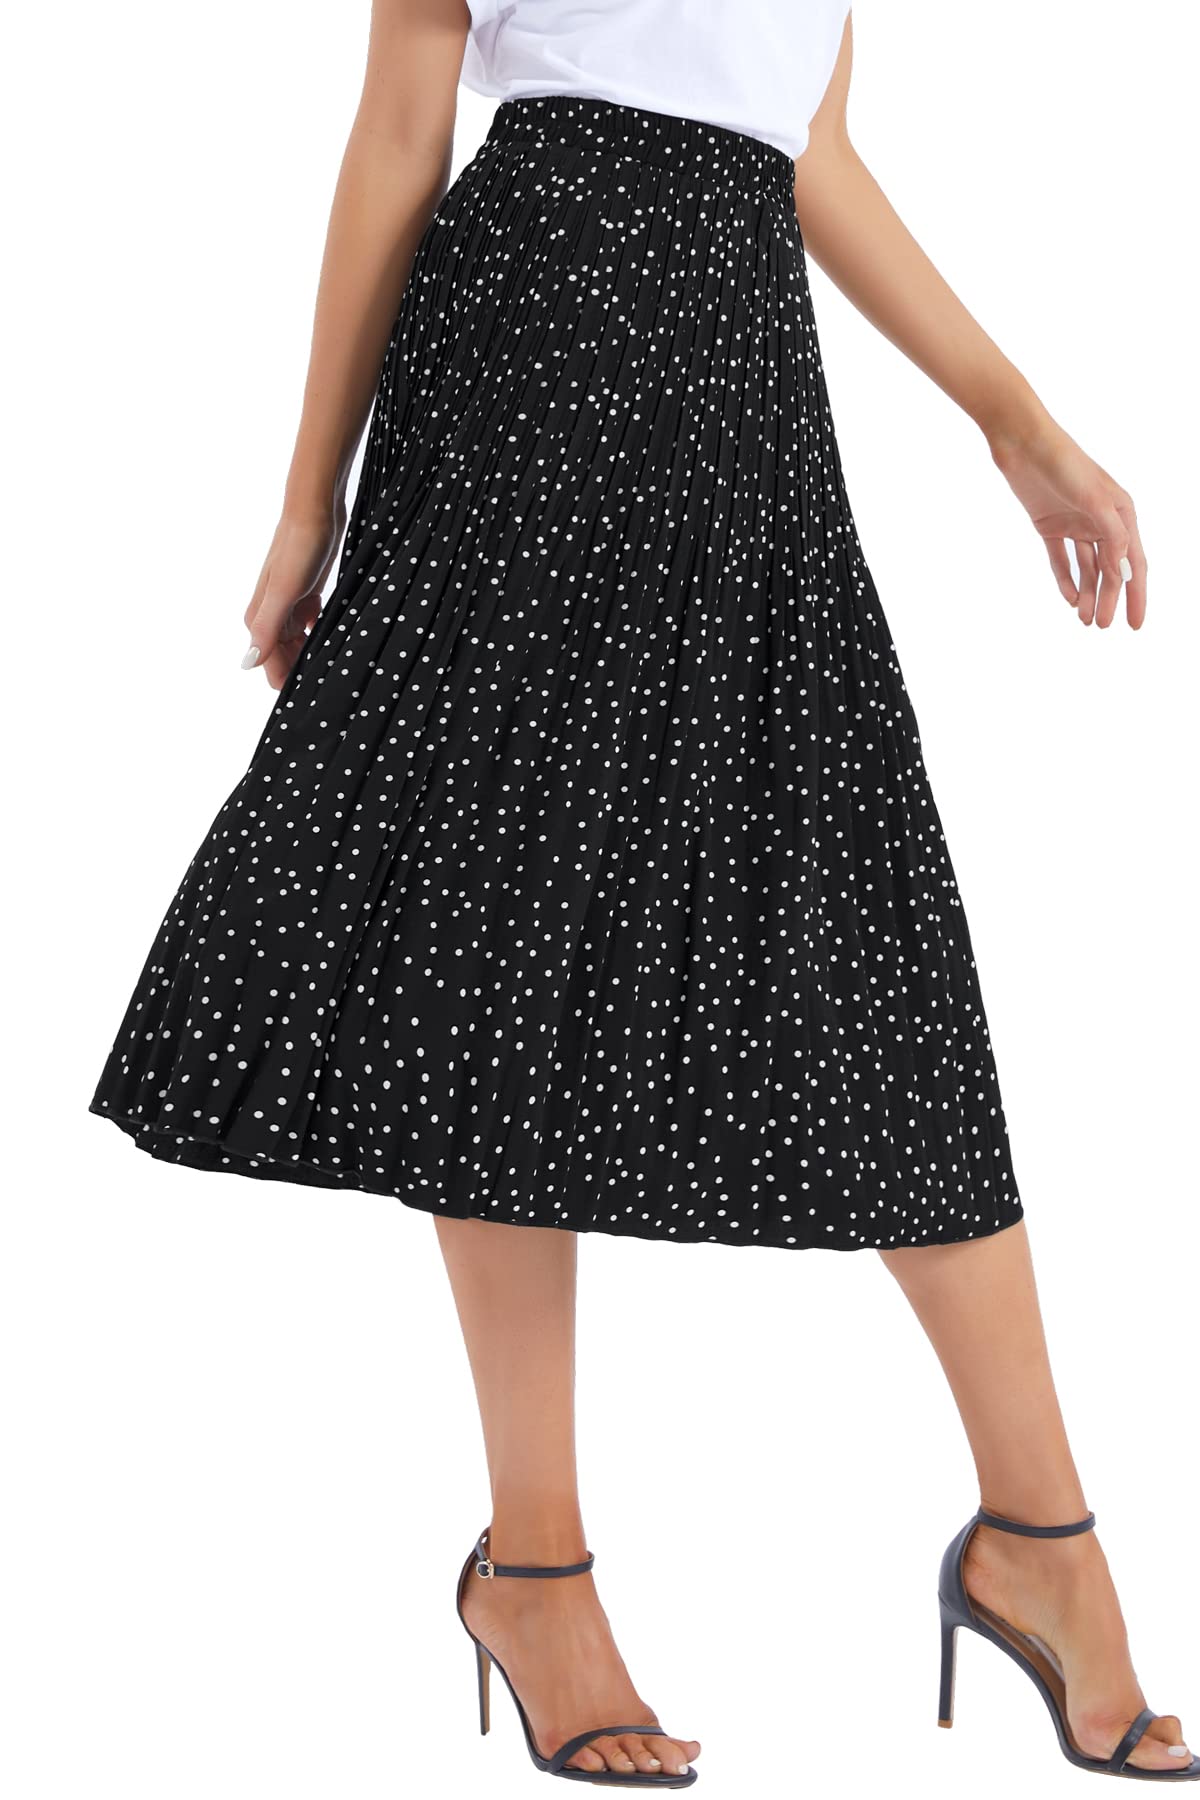 DJT High Waist A-Line Pleated SkirtFASHION Black Polka Dots Womens Elastic Polka Dot Midi Swing Skirt